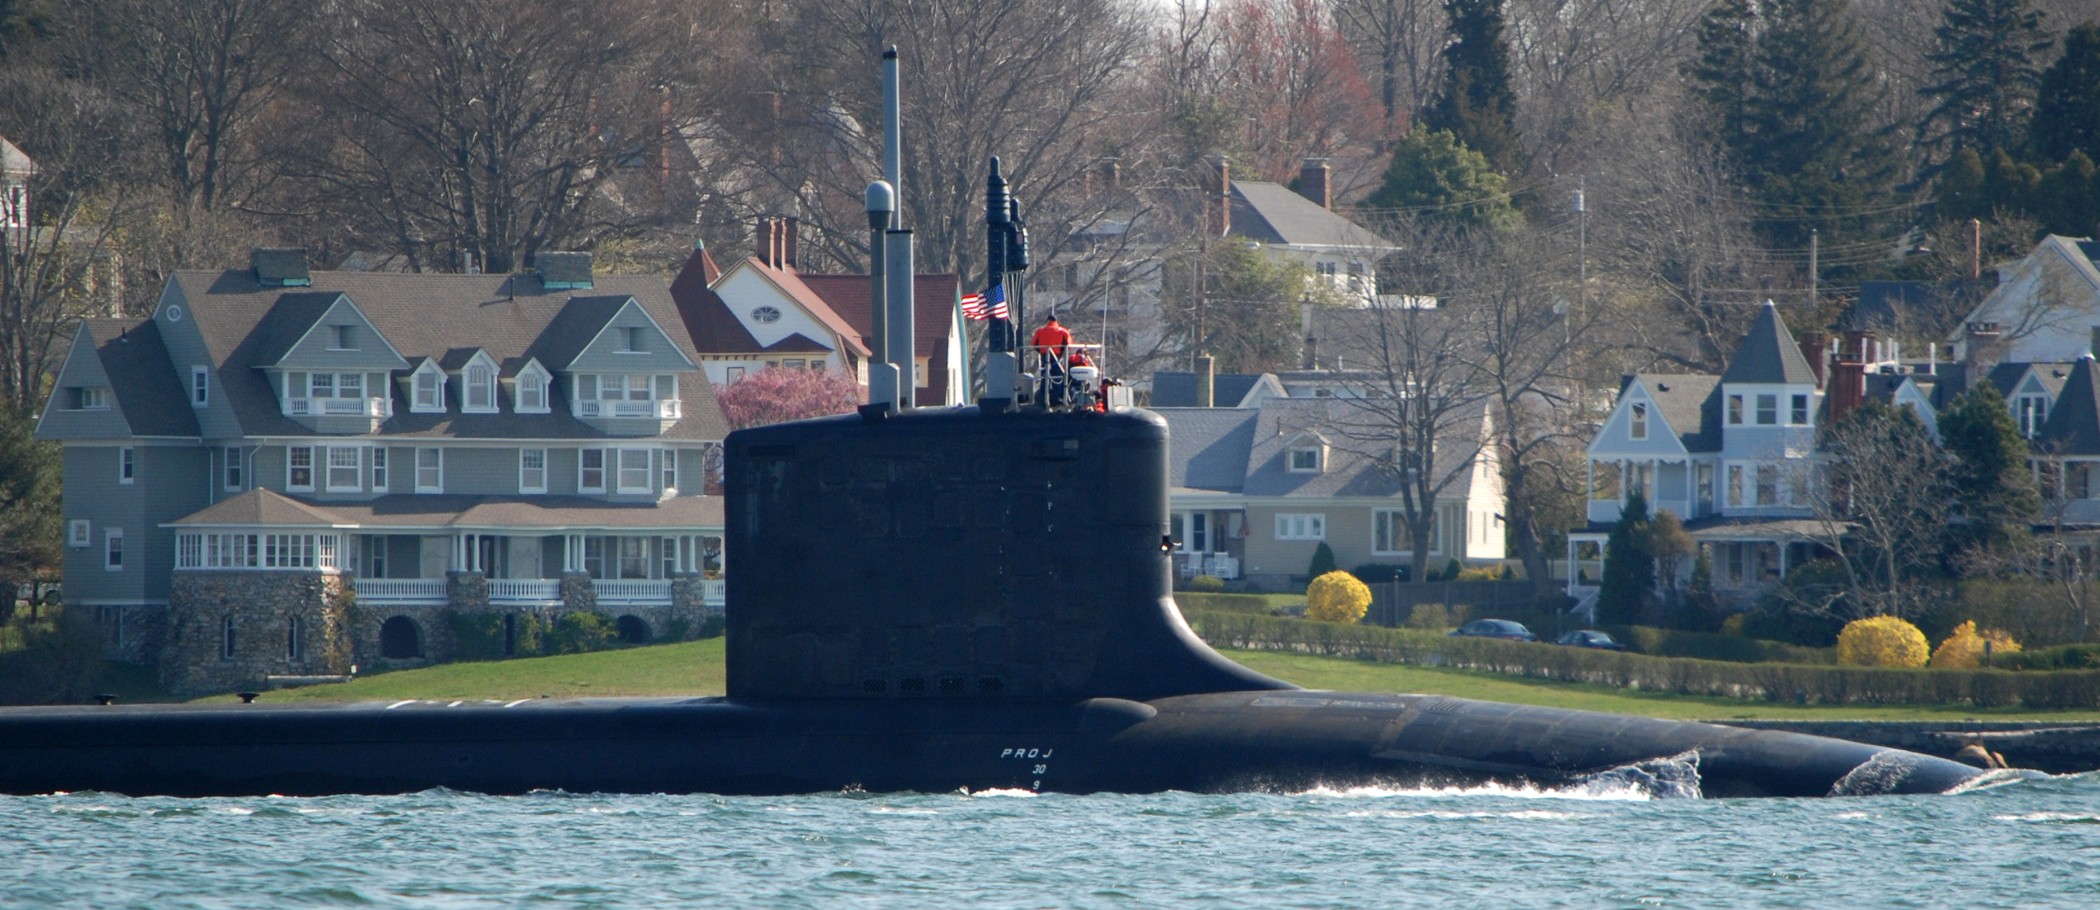 ssn-782 uss mississippi virginia class attack submarine us navy 29 new london groton